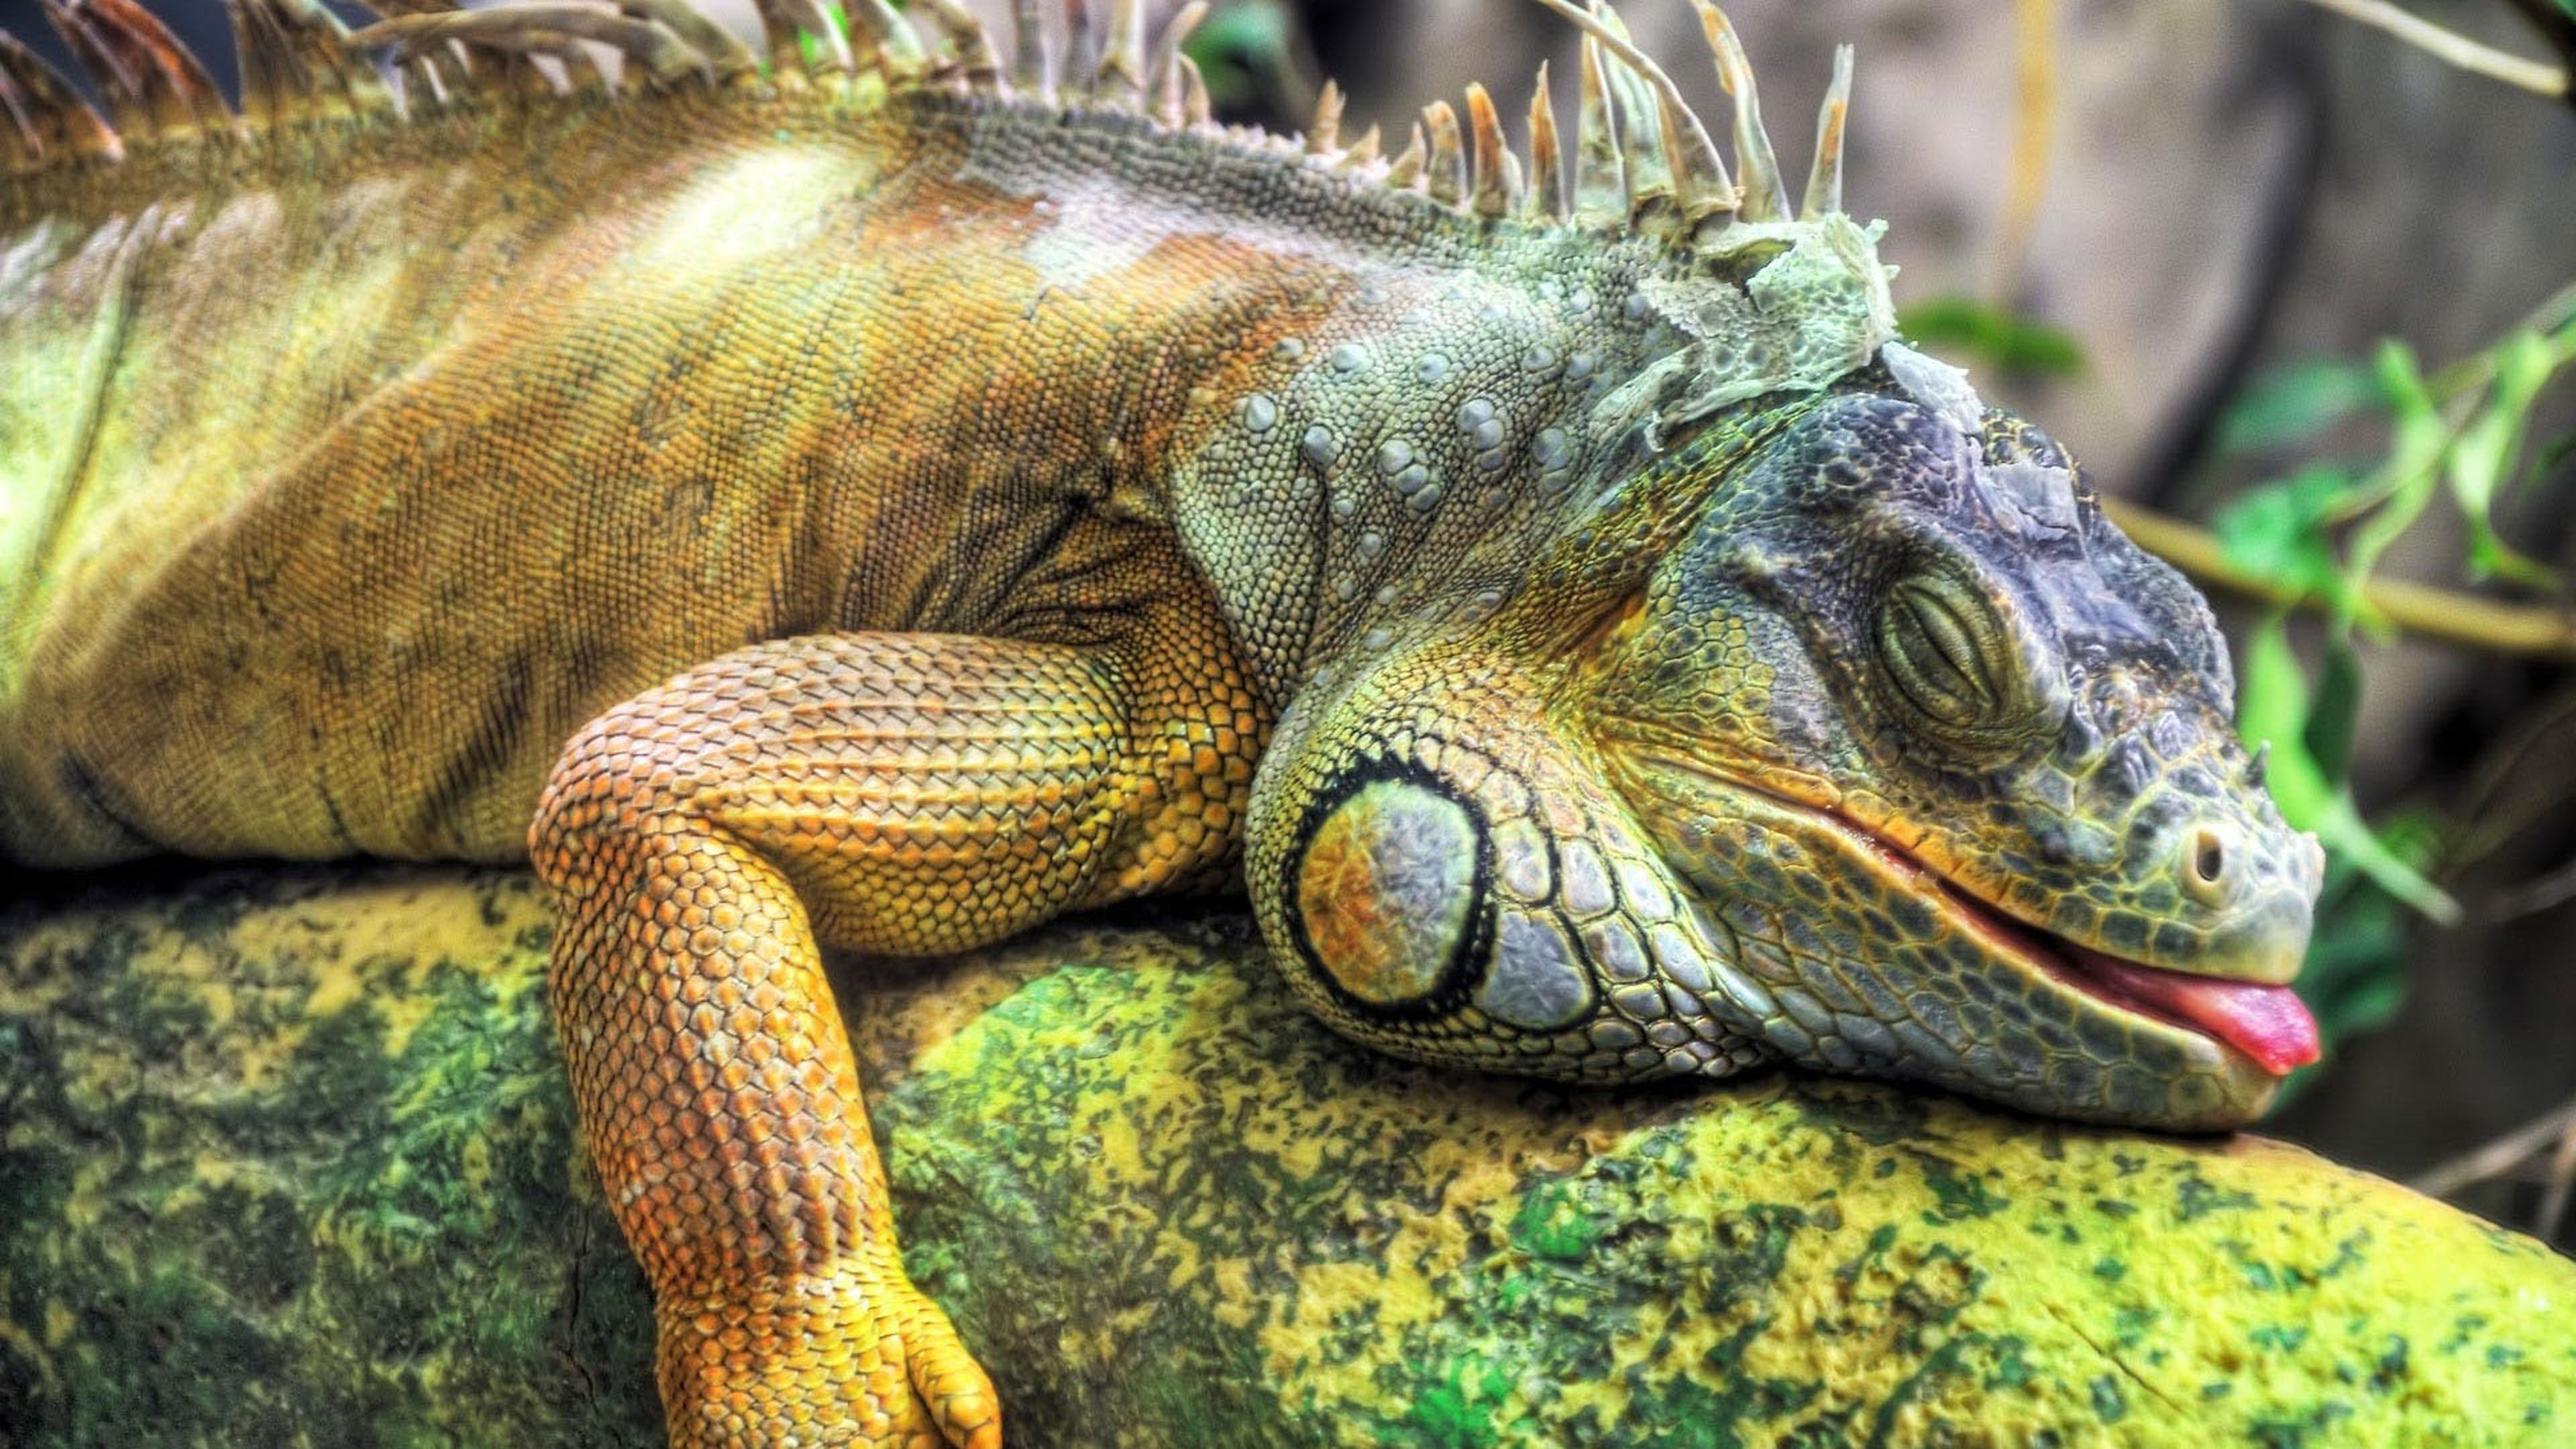 Sleepy lizard, Iguana species, Resting on wood, Relaxing scene, 3840x2160 4K Desktop